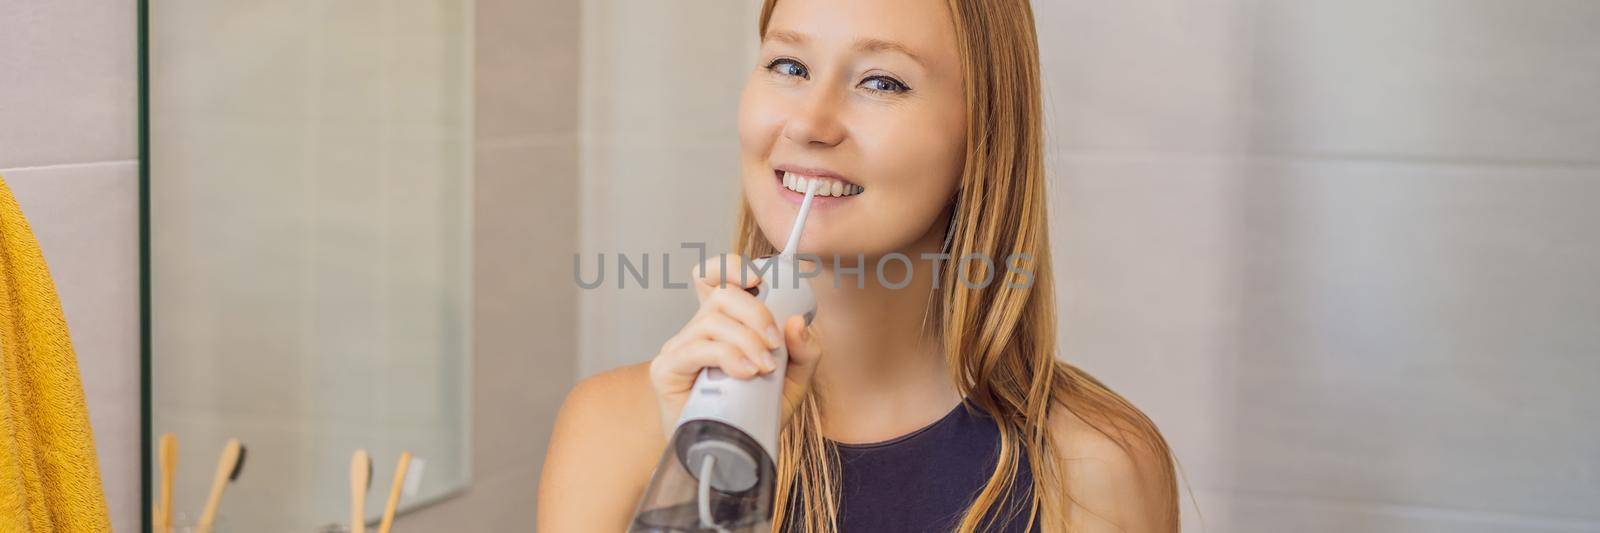 Woman using an oral irrigator in bathroom BANNER, LONG FORMAT by galitskaya